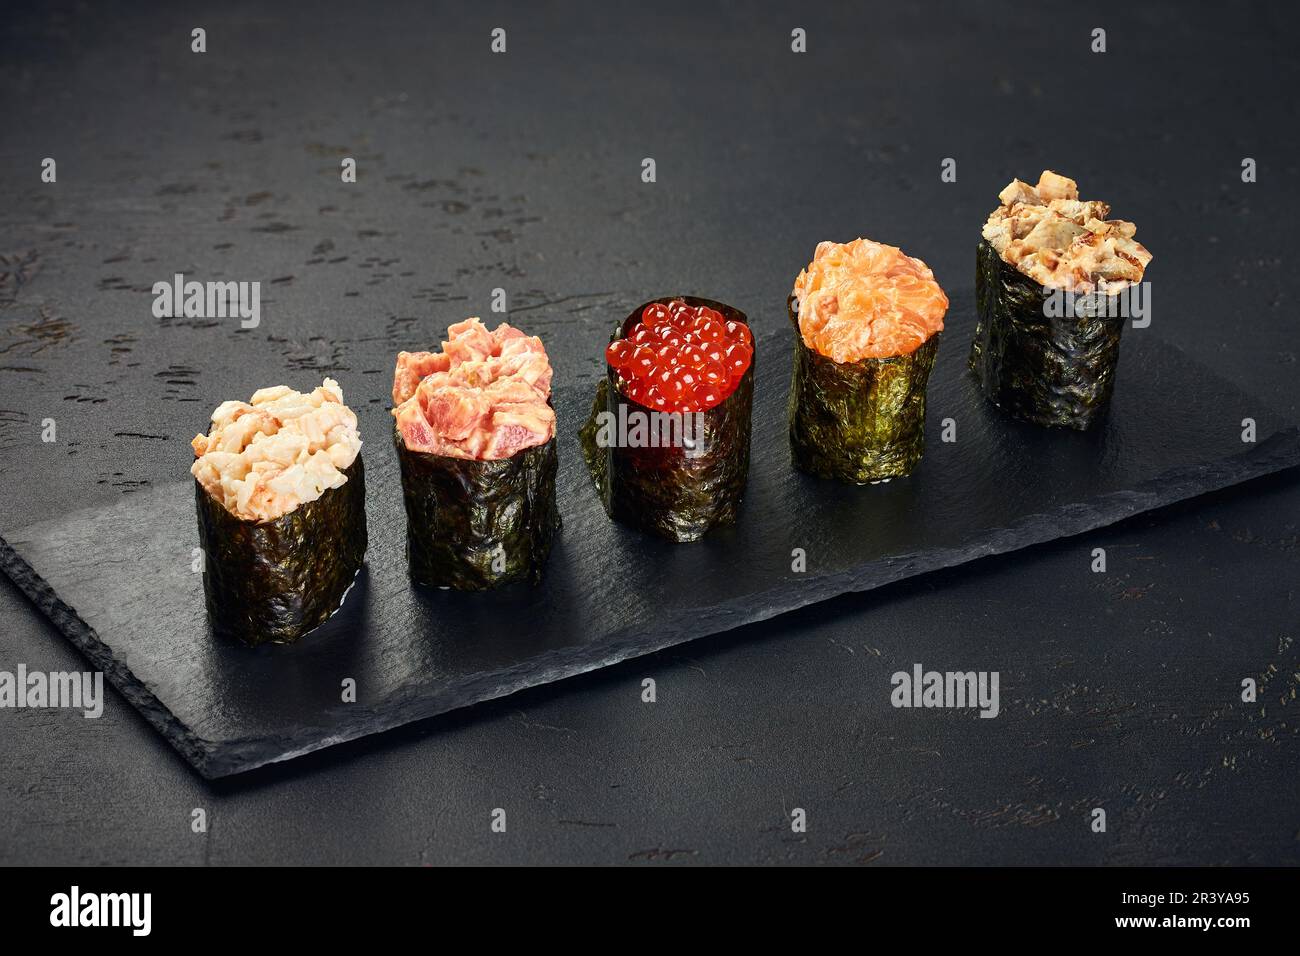 https://c8.alamy.com/comp/2R3YA95/set-of-gunkan-maki-sushi-with-different-types-of-fish-salmon-scallop-perch-eel-shrimp-and-caviar-on-black-background-trad-2R3YA95.jpg